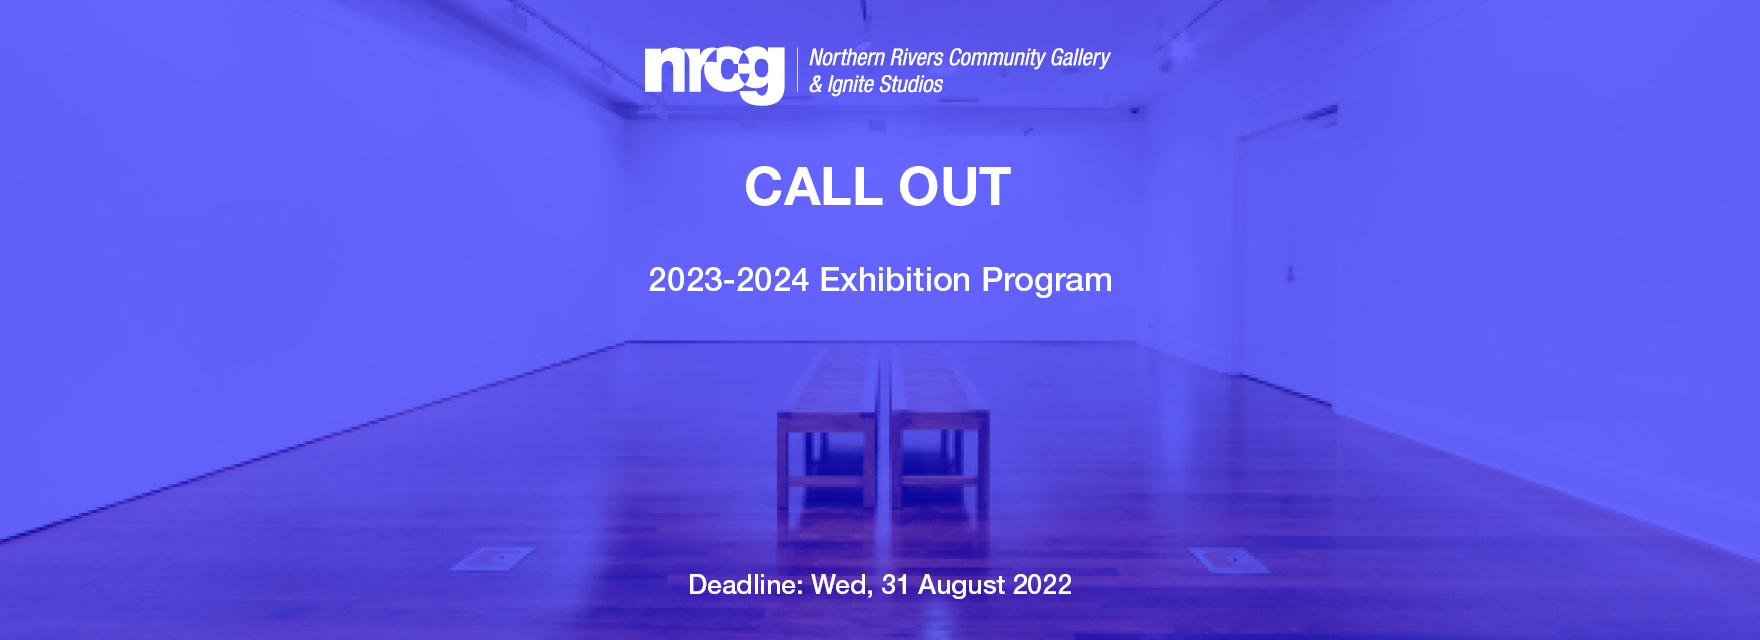 NRCG 2023 2024 Exhibition Application Graphics July 2022 1320x480